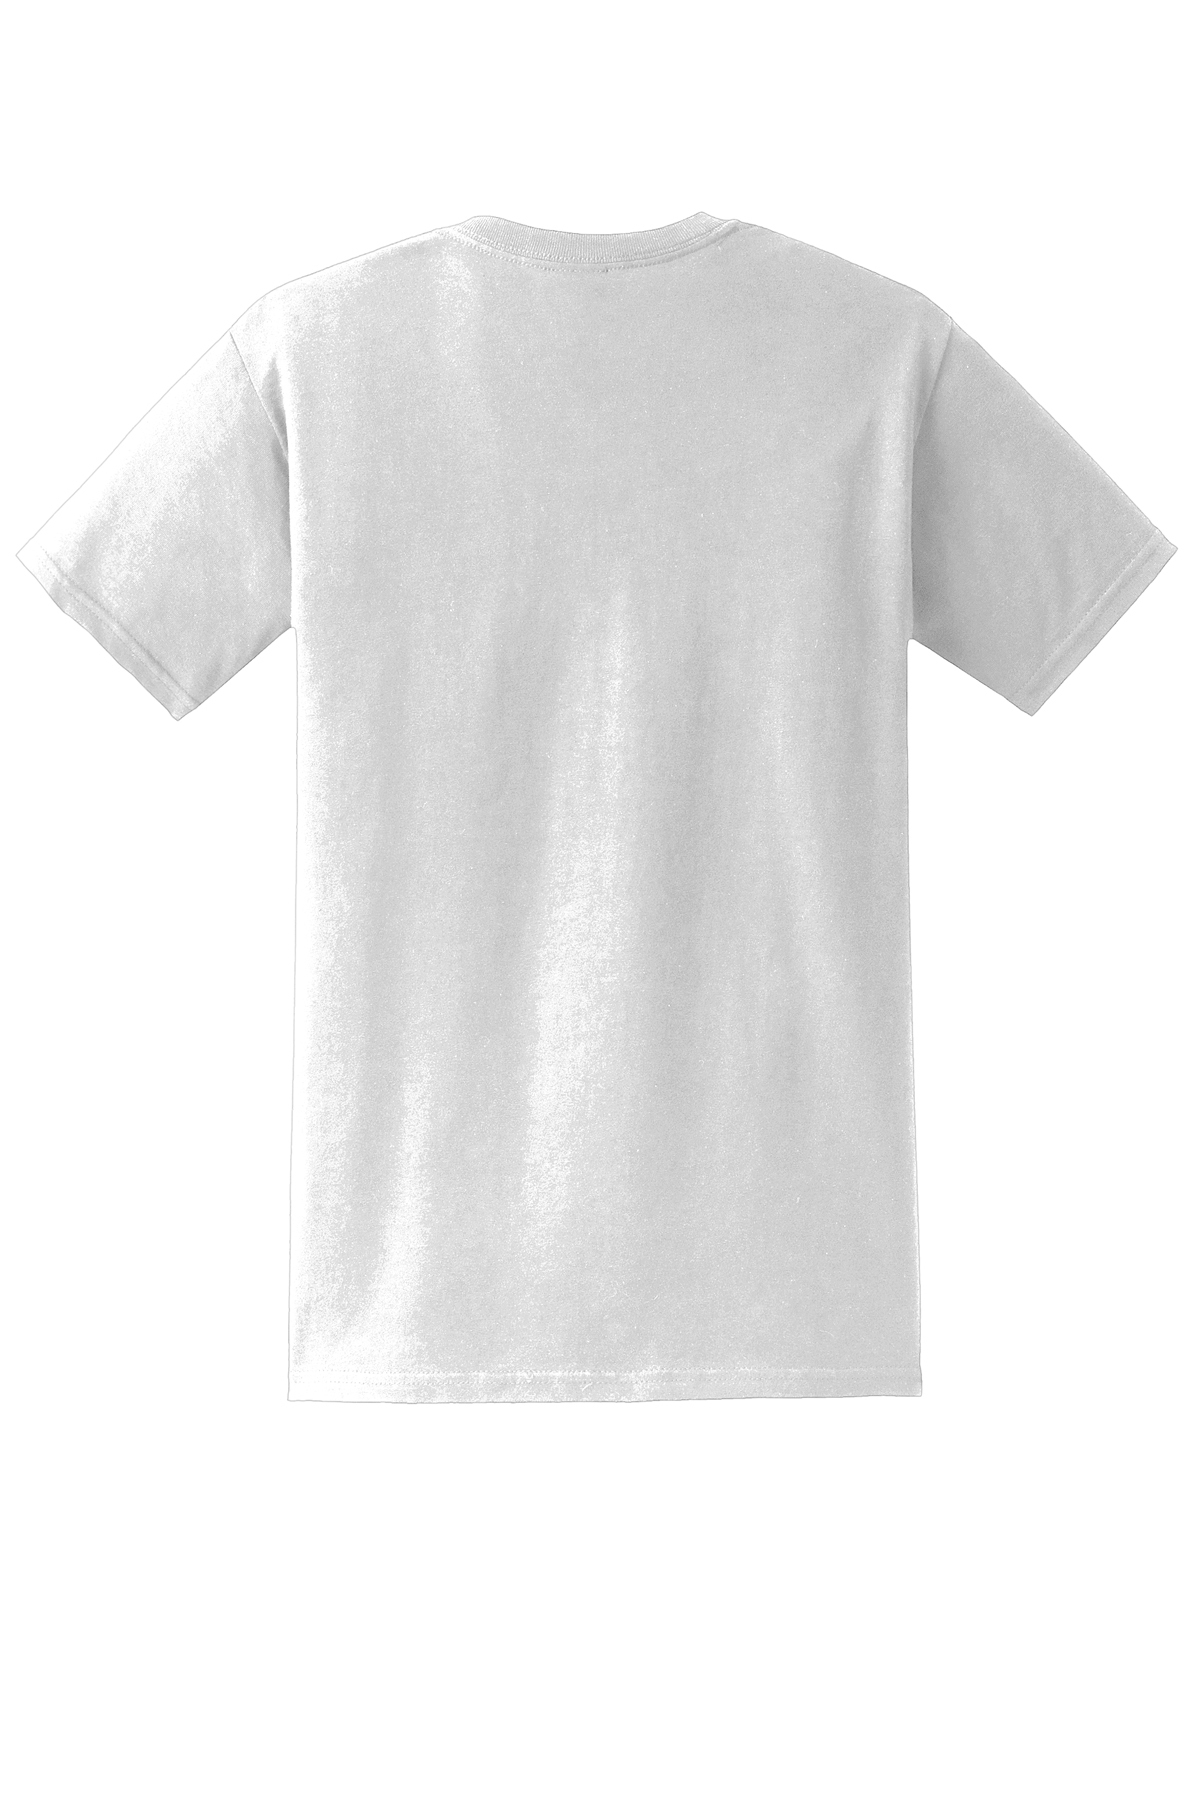 Gildan - DryBlend 50 Cotton/50 Poly Pocket T-Shirt | Product | SanMar